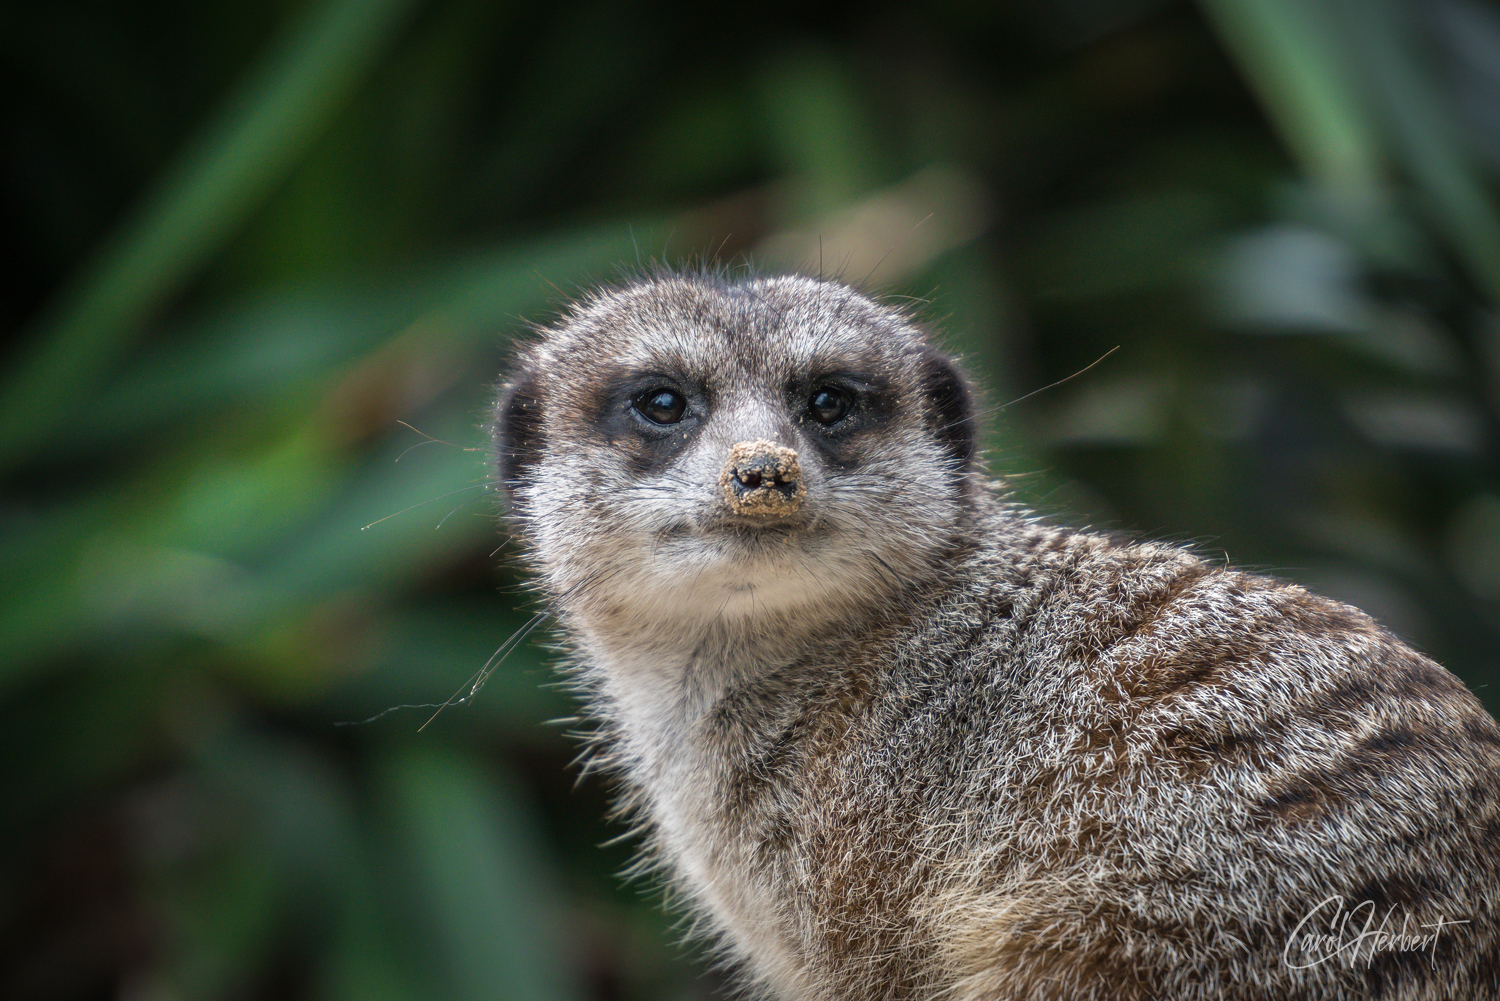 Close up photograph of a Meerkat looking at the camera